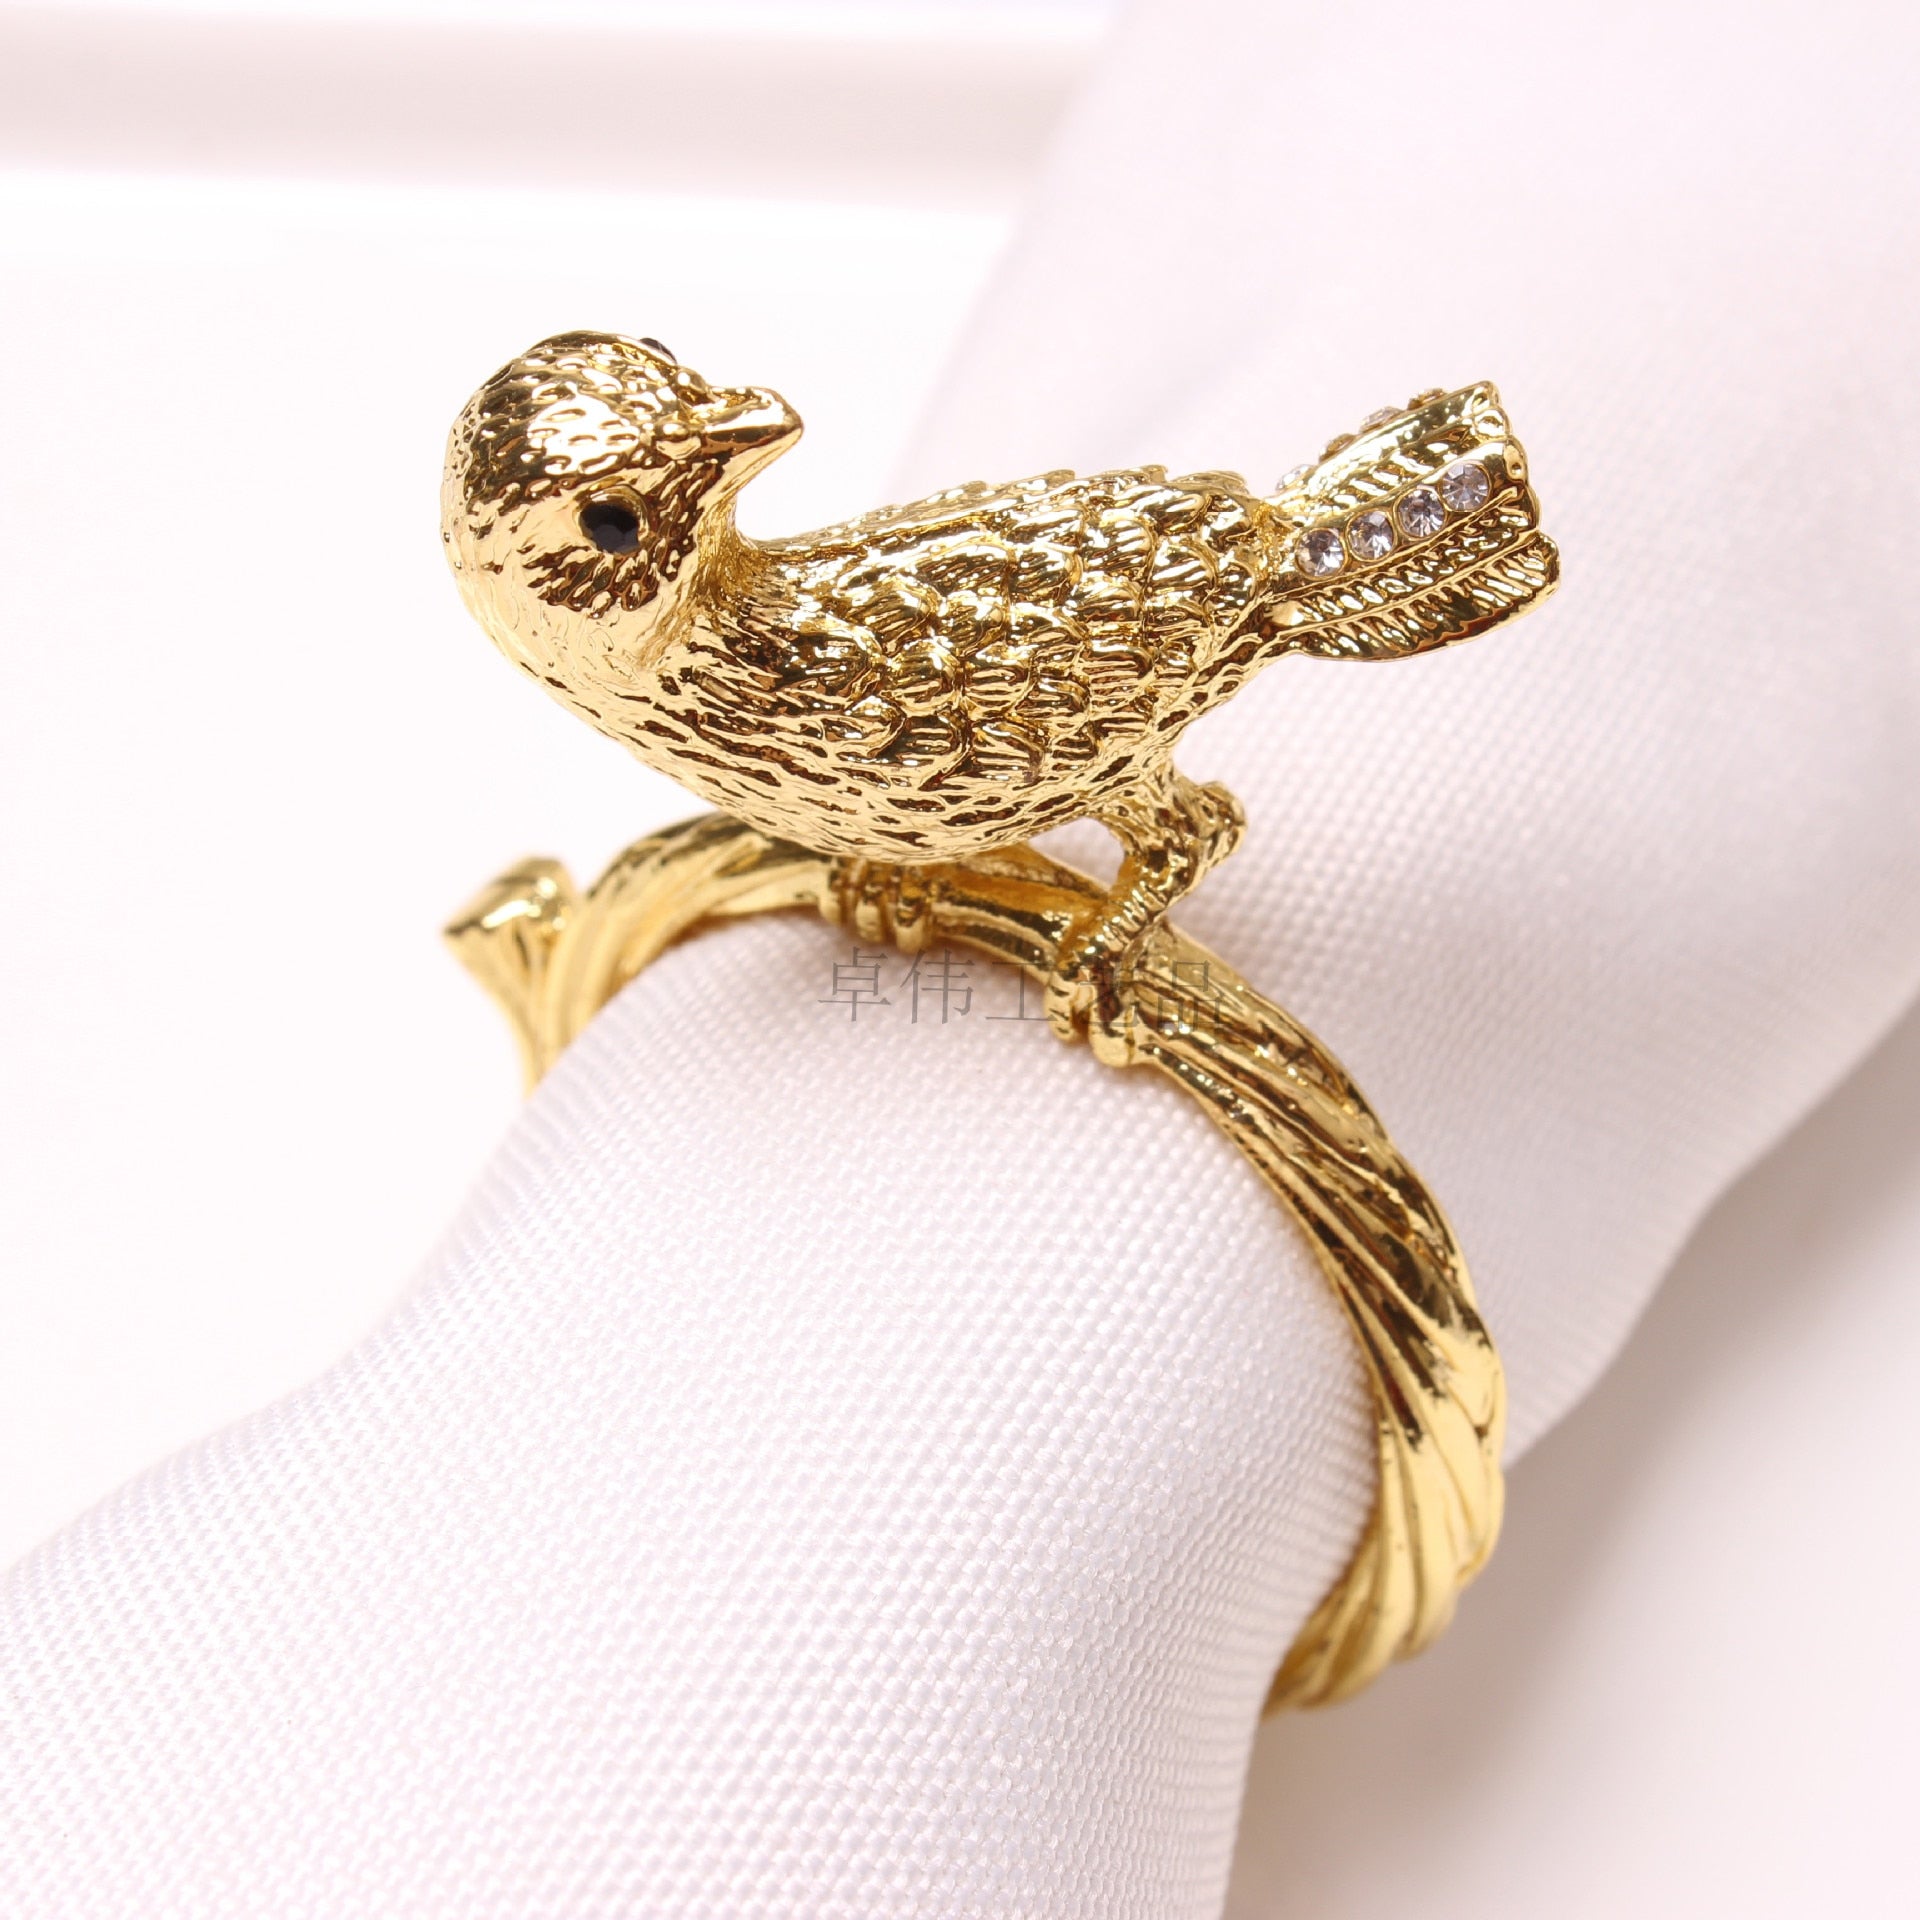 Gold Bird Napkin Ring - 10pc